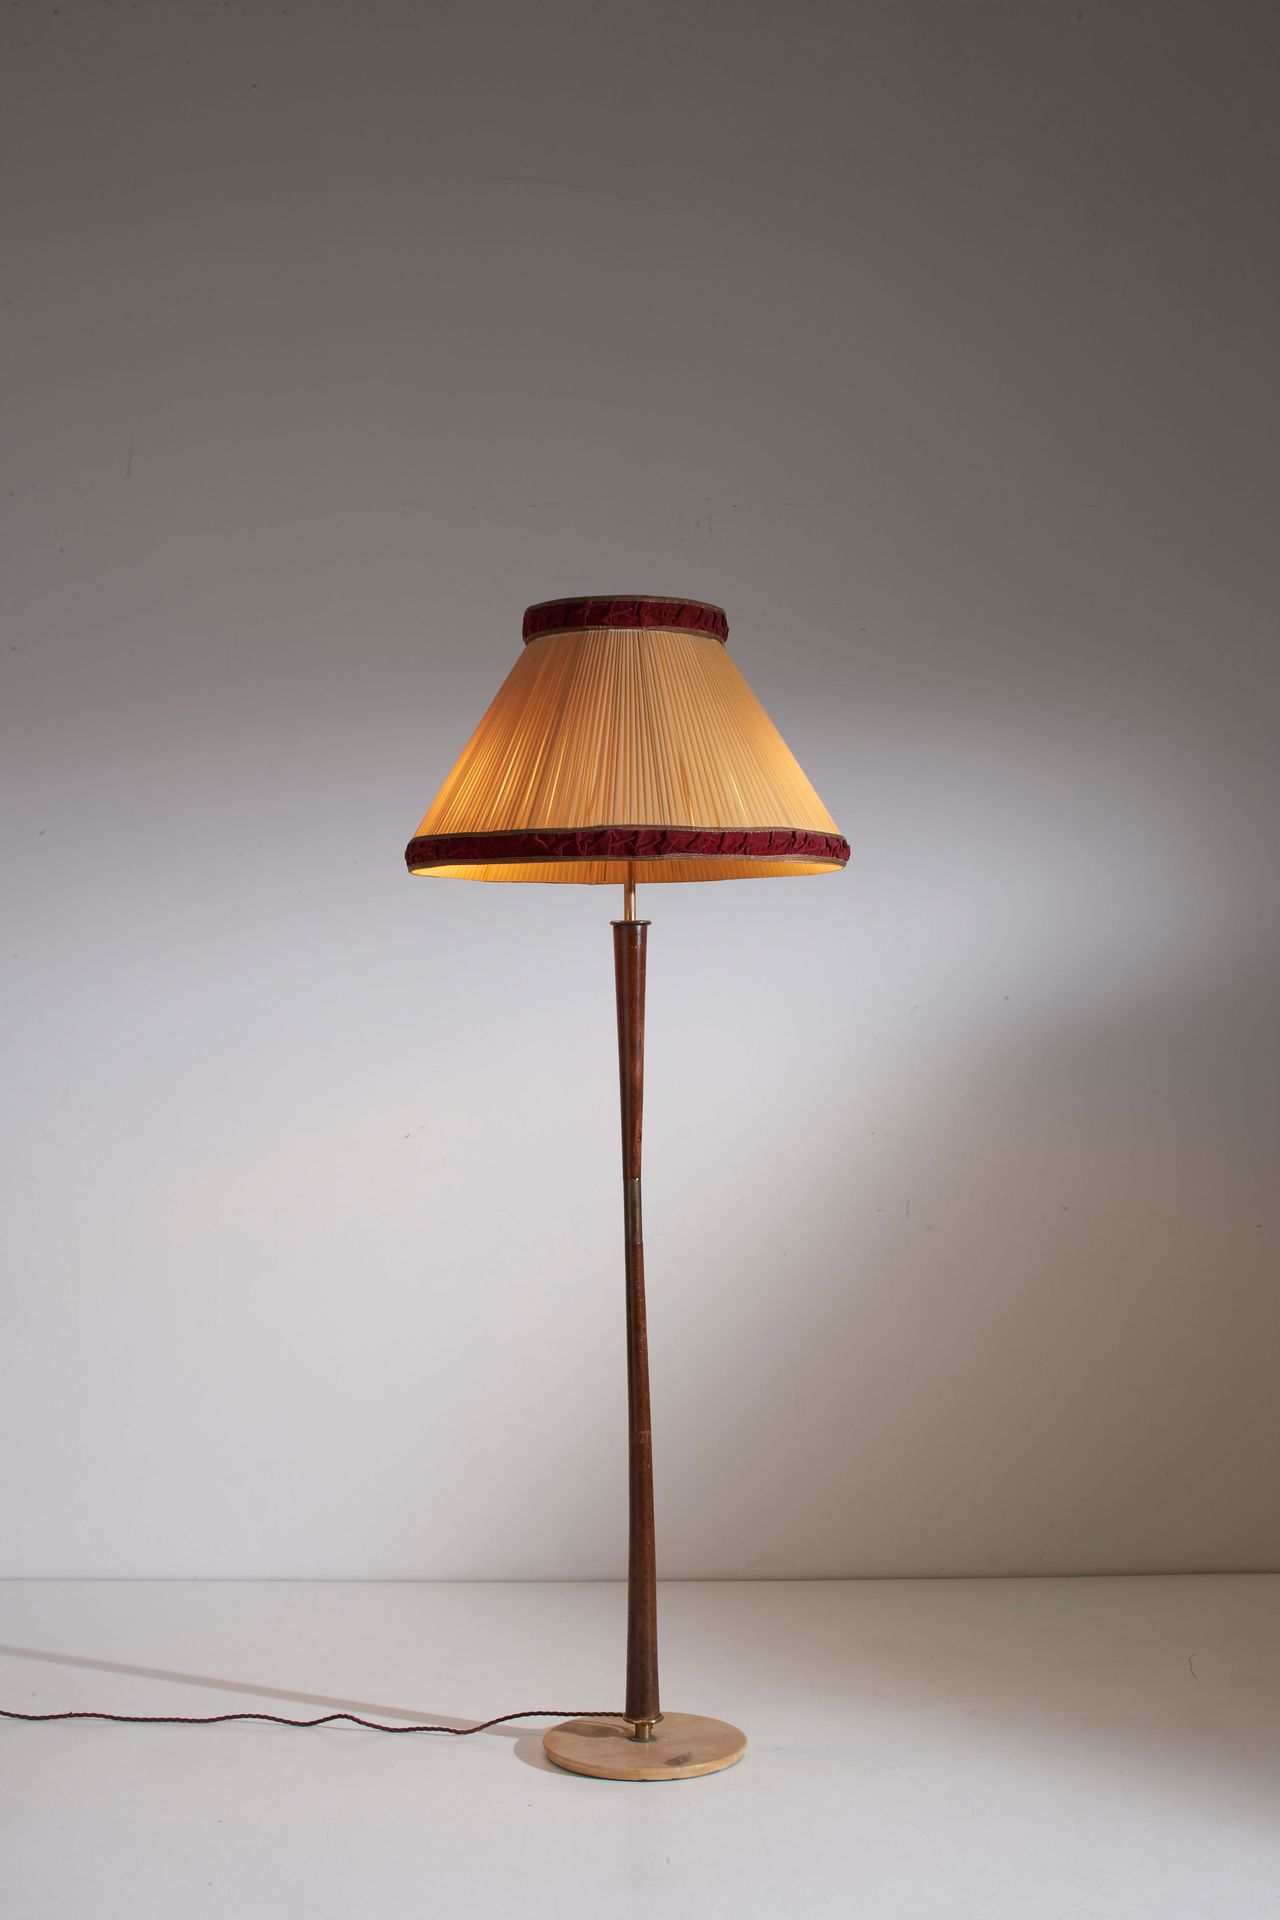 STILNOVO 落地灯。大理石。木材，黄铜，喷漆铝，织物。意大利 1950年代。
cm 180x65 with lampshade
A FLOOR LAMP &hellip;